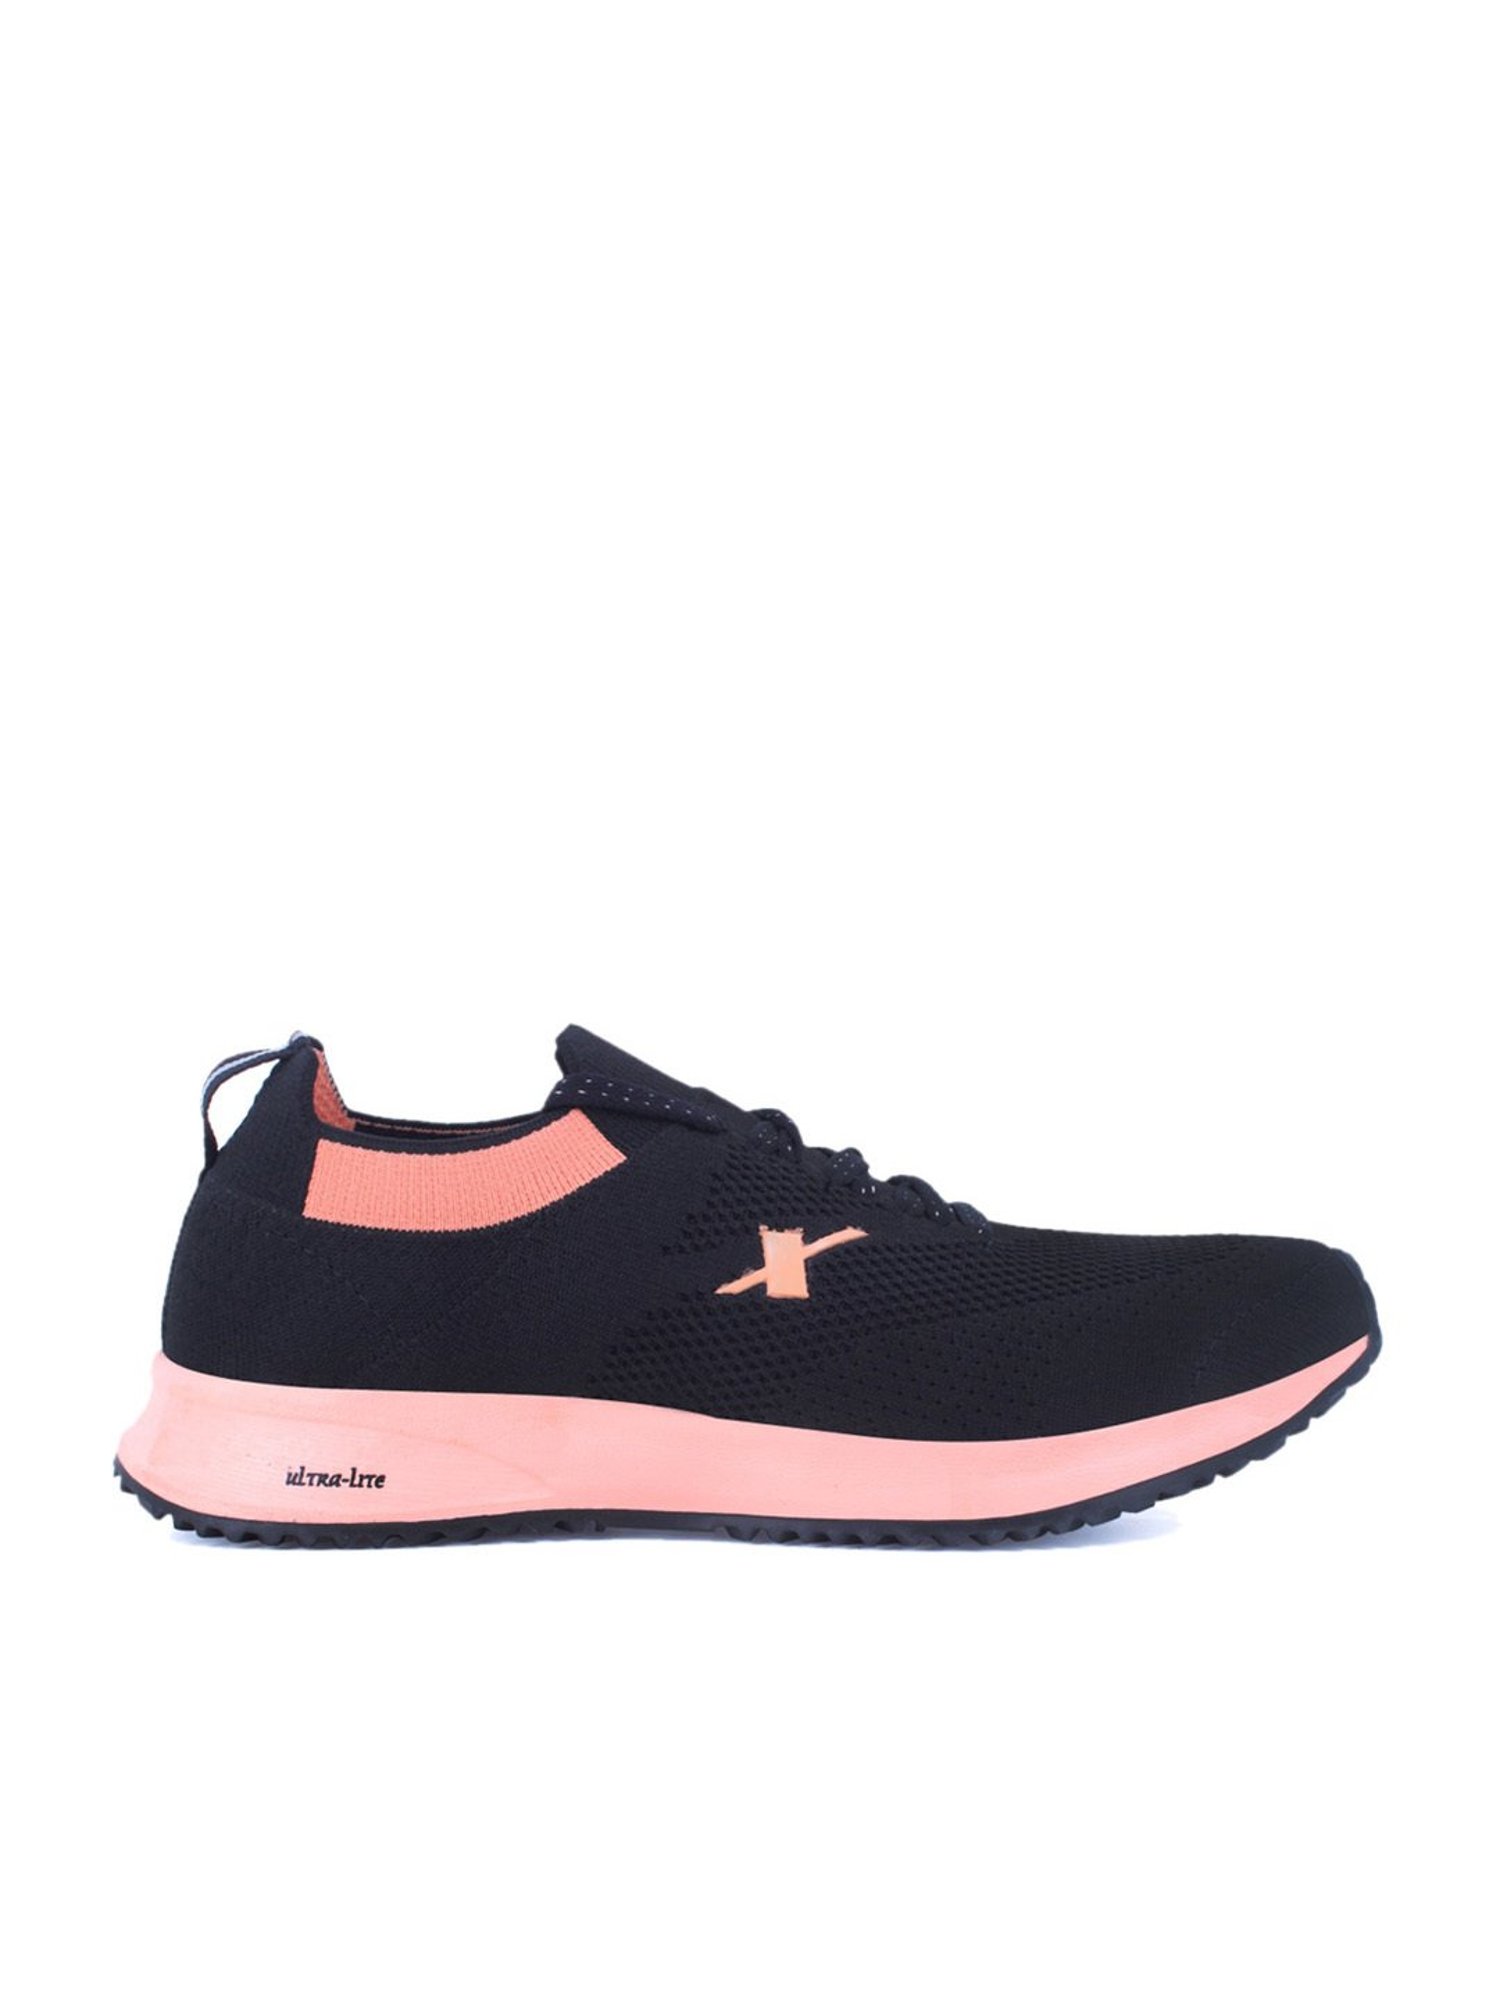 Qixp Qixing Sport Shoes Womens Sz 8.5 Pink White Athletic Trainers | eBay